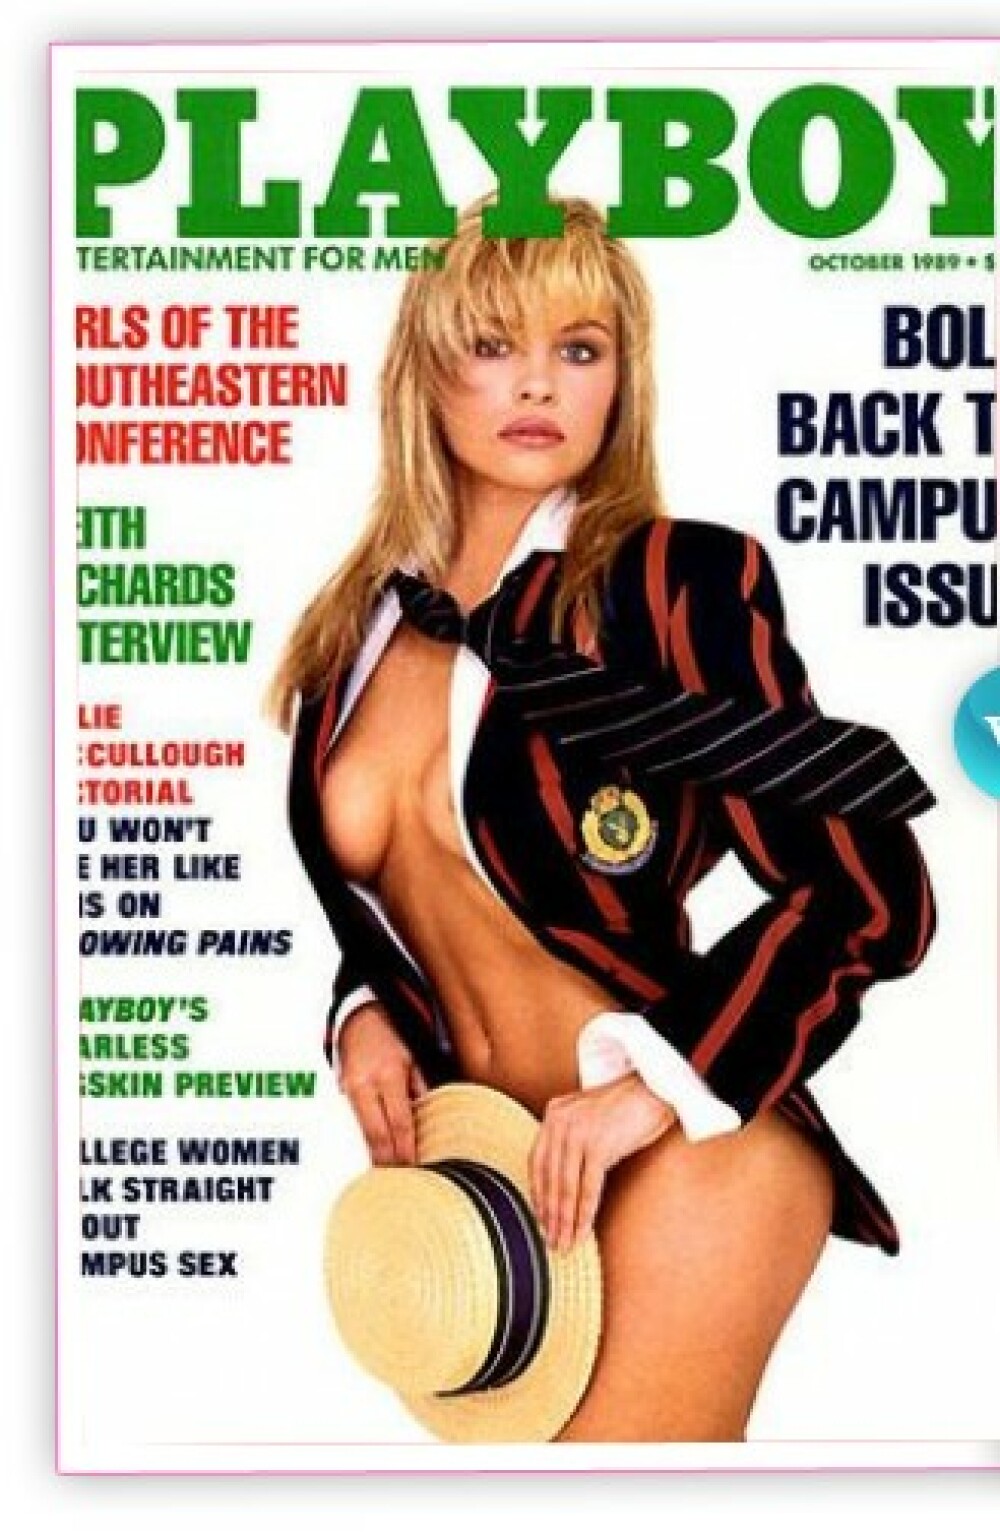 Pamela Anderson, a 13-a oara pe coperta Playboy! Cam imbracata.Galerie foto - Imaginea 10